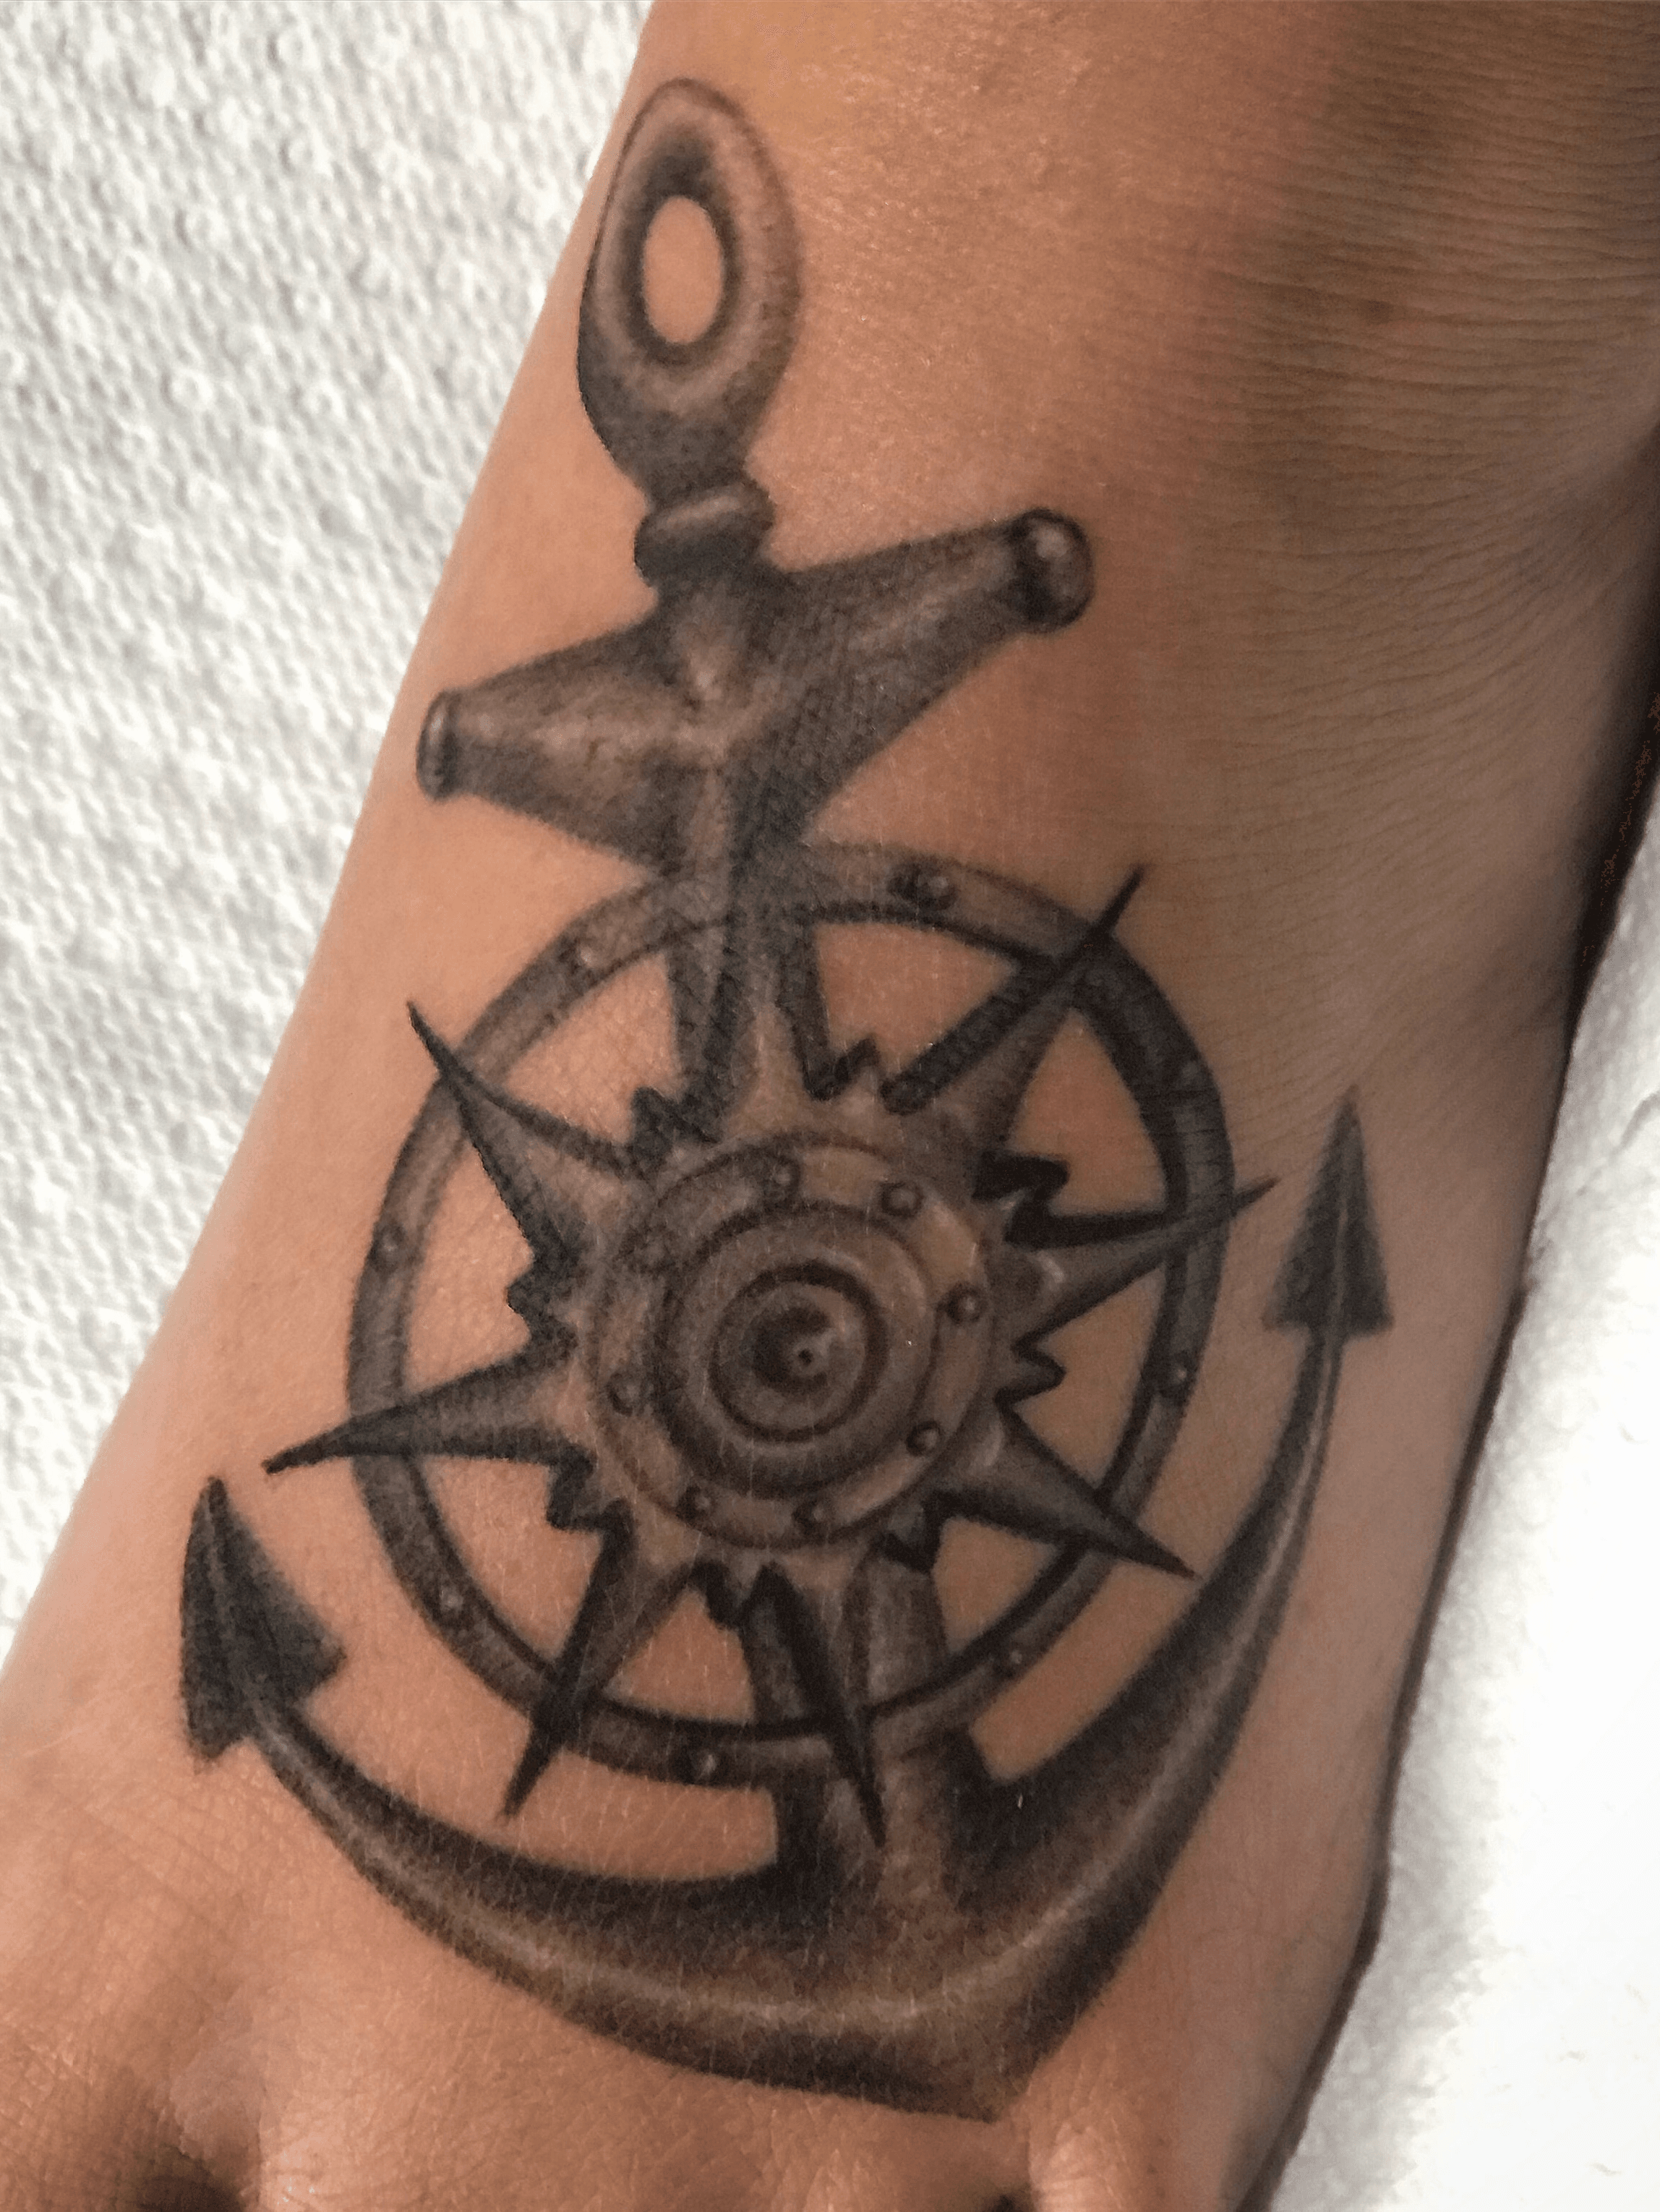 Three anchor tattoos on feet by Blaze Schwaller TattooNOW